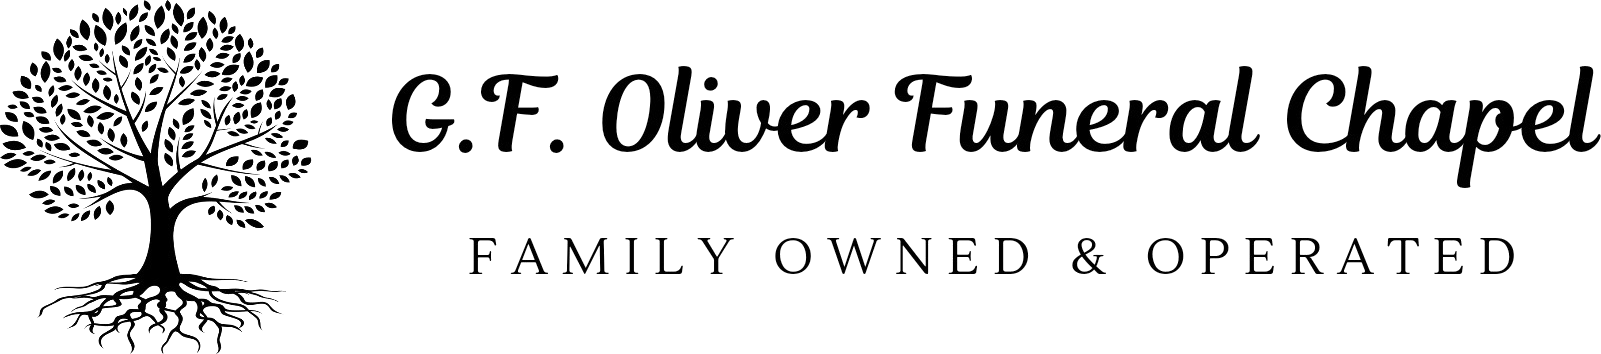 G.F. Oliver Funeral Chapel Ltd.